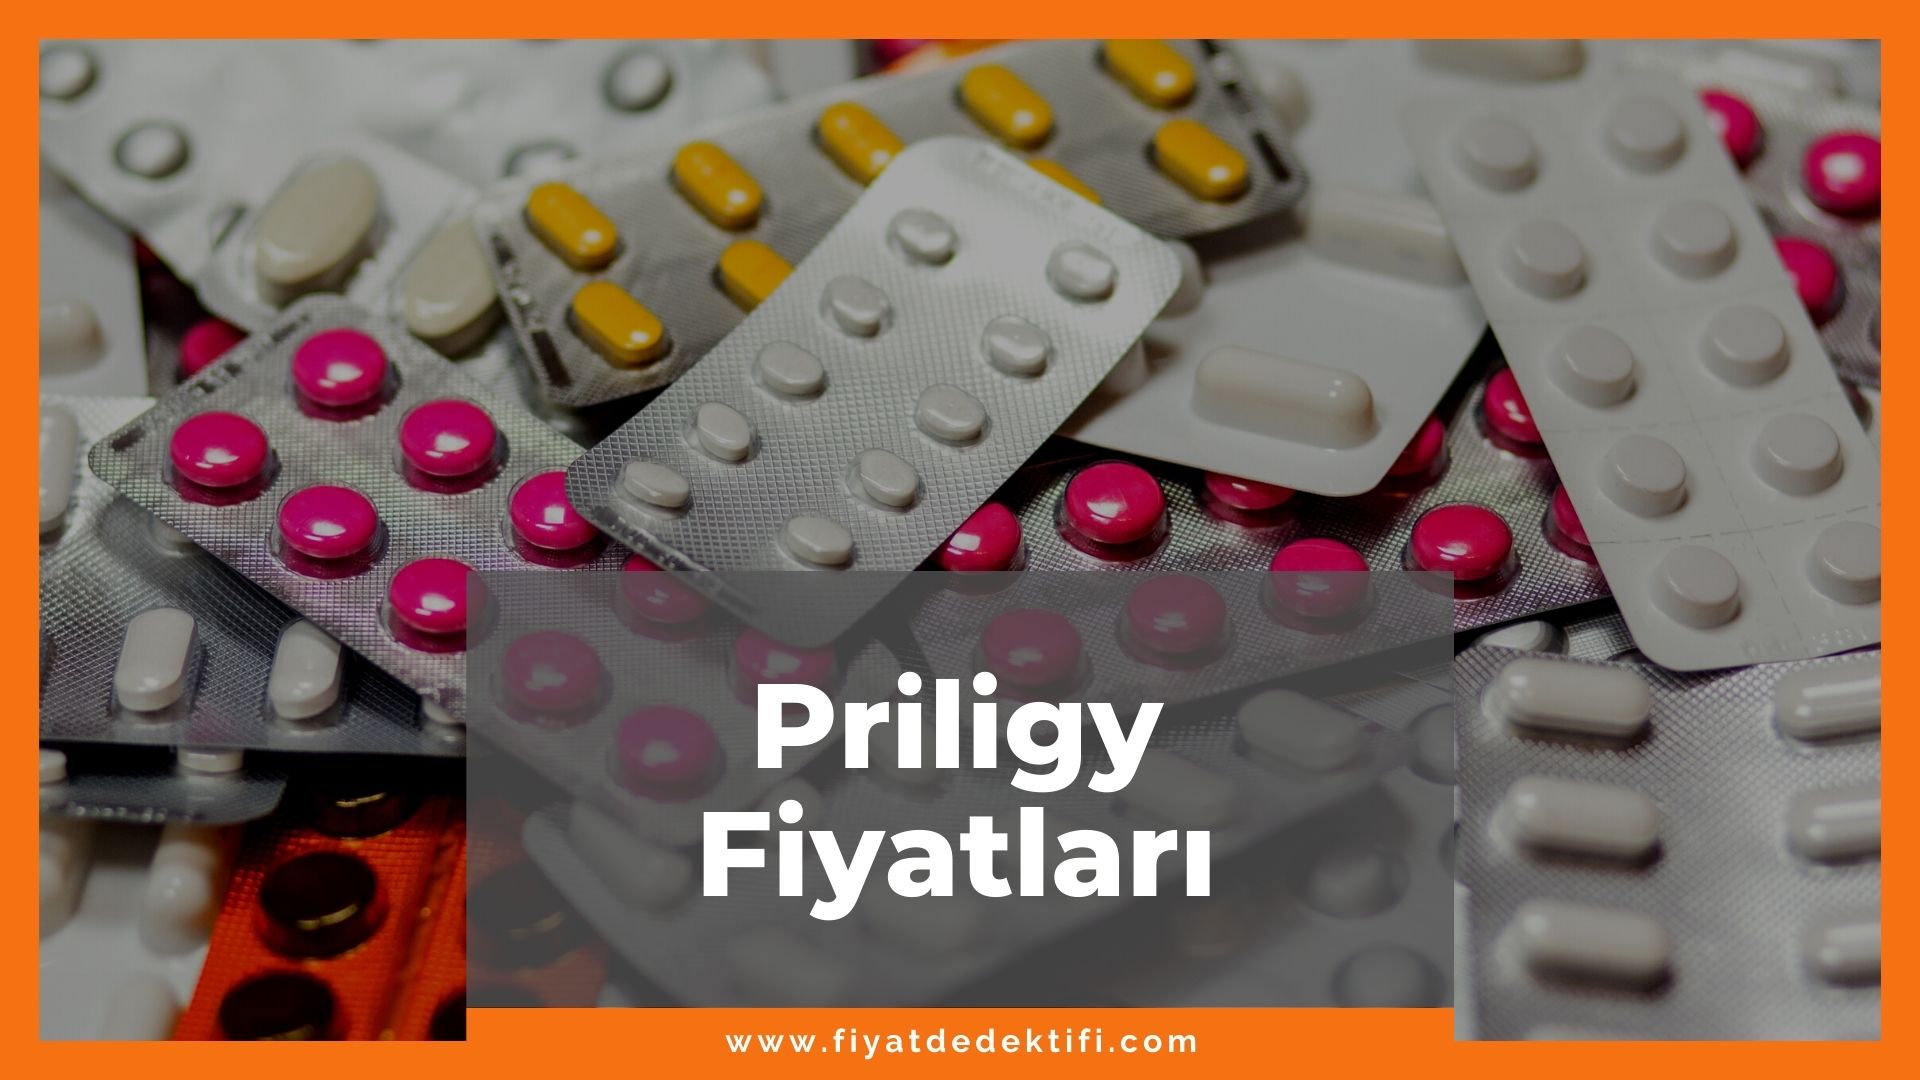 Priligy Fiyat 2021, Priligy Fiyatı, priligy nedir ne işe yarar, priligy zamlandı mı, priligy zamlı fiyatı ne kadar oldu